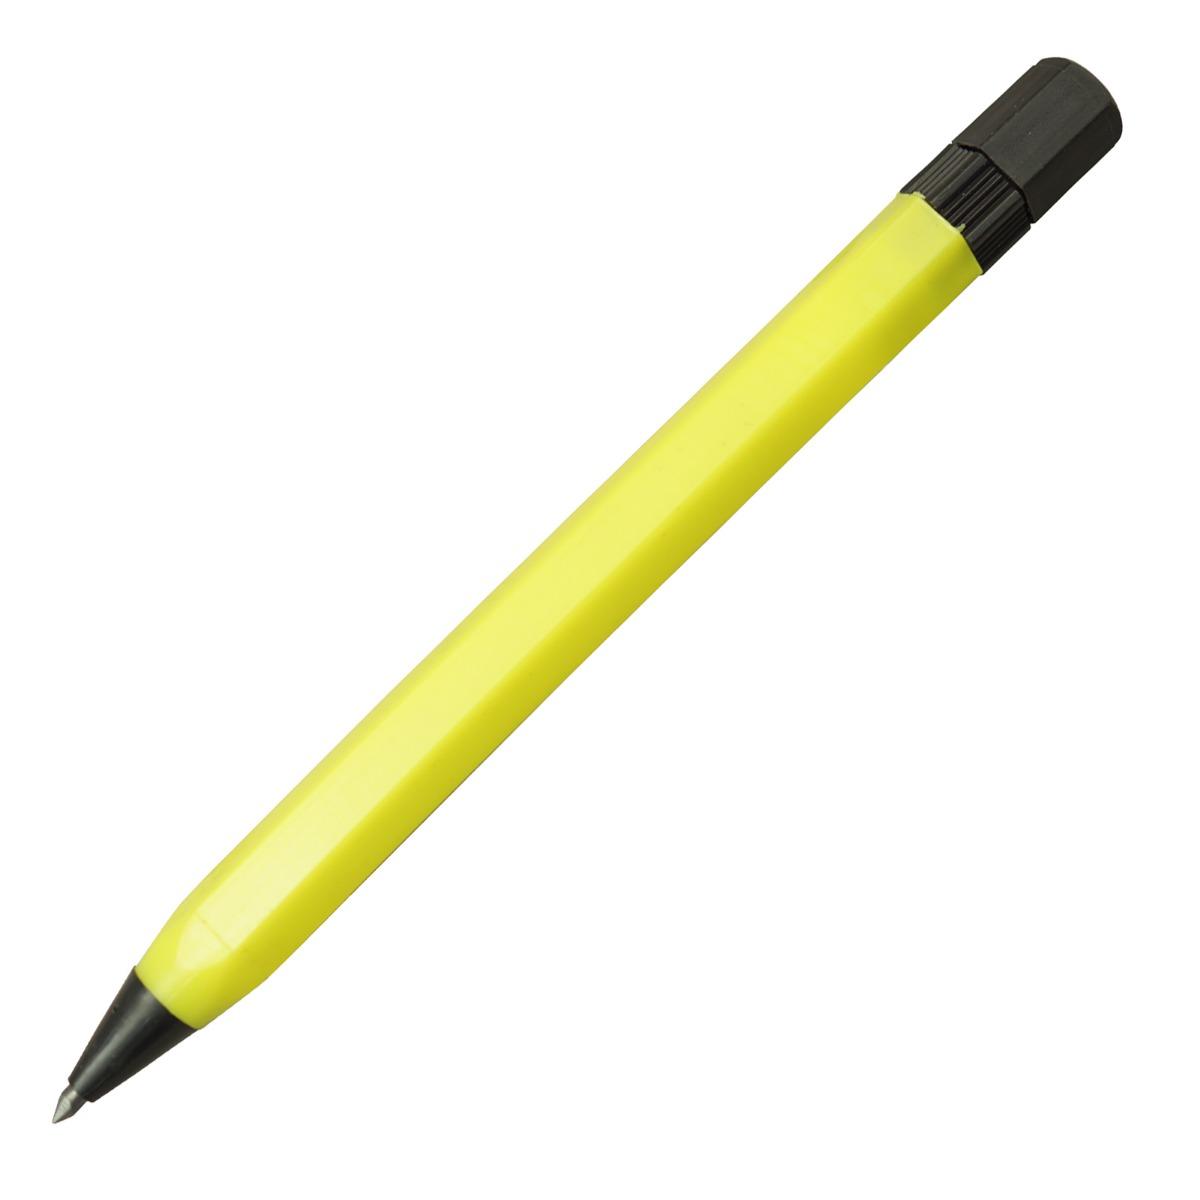  Penhouse Model No :17074  2.0 mm   Yellow Color Body Twist Type Tip Pencil